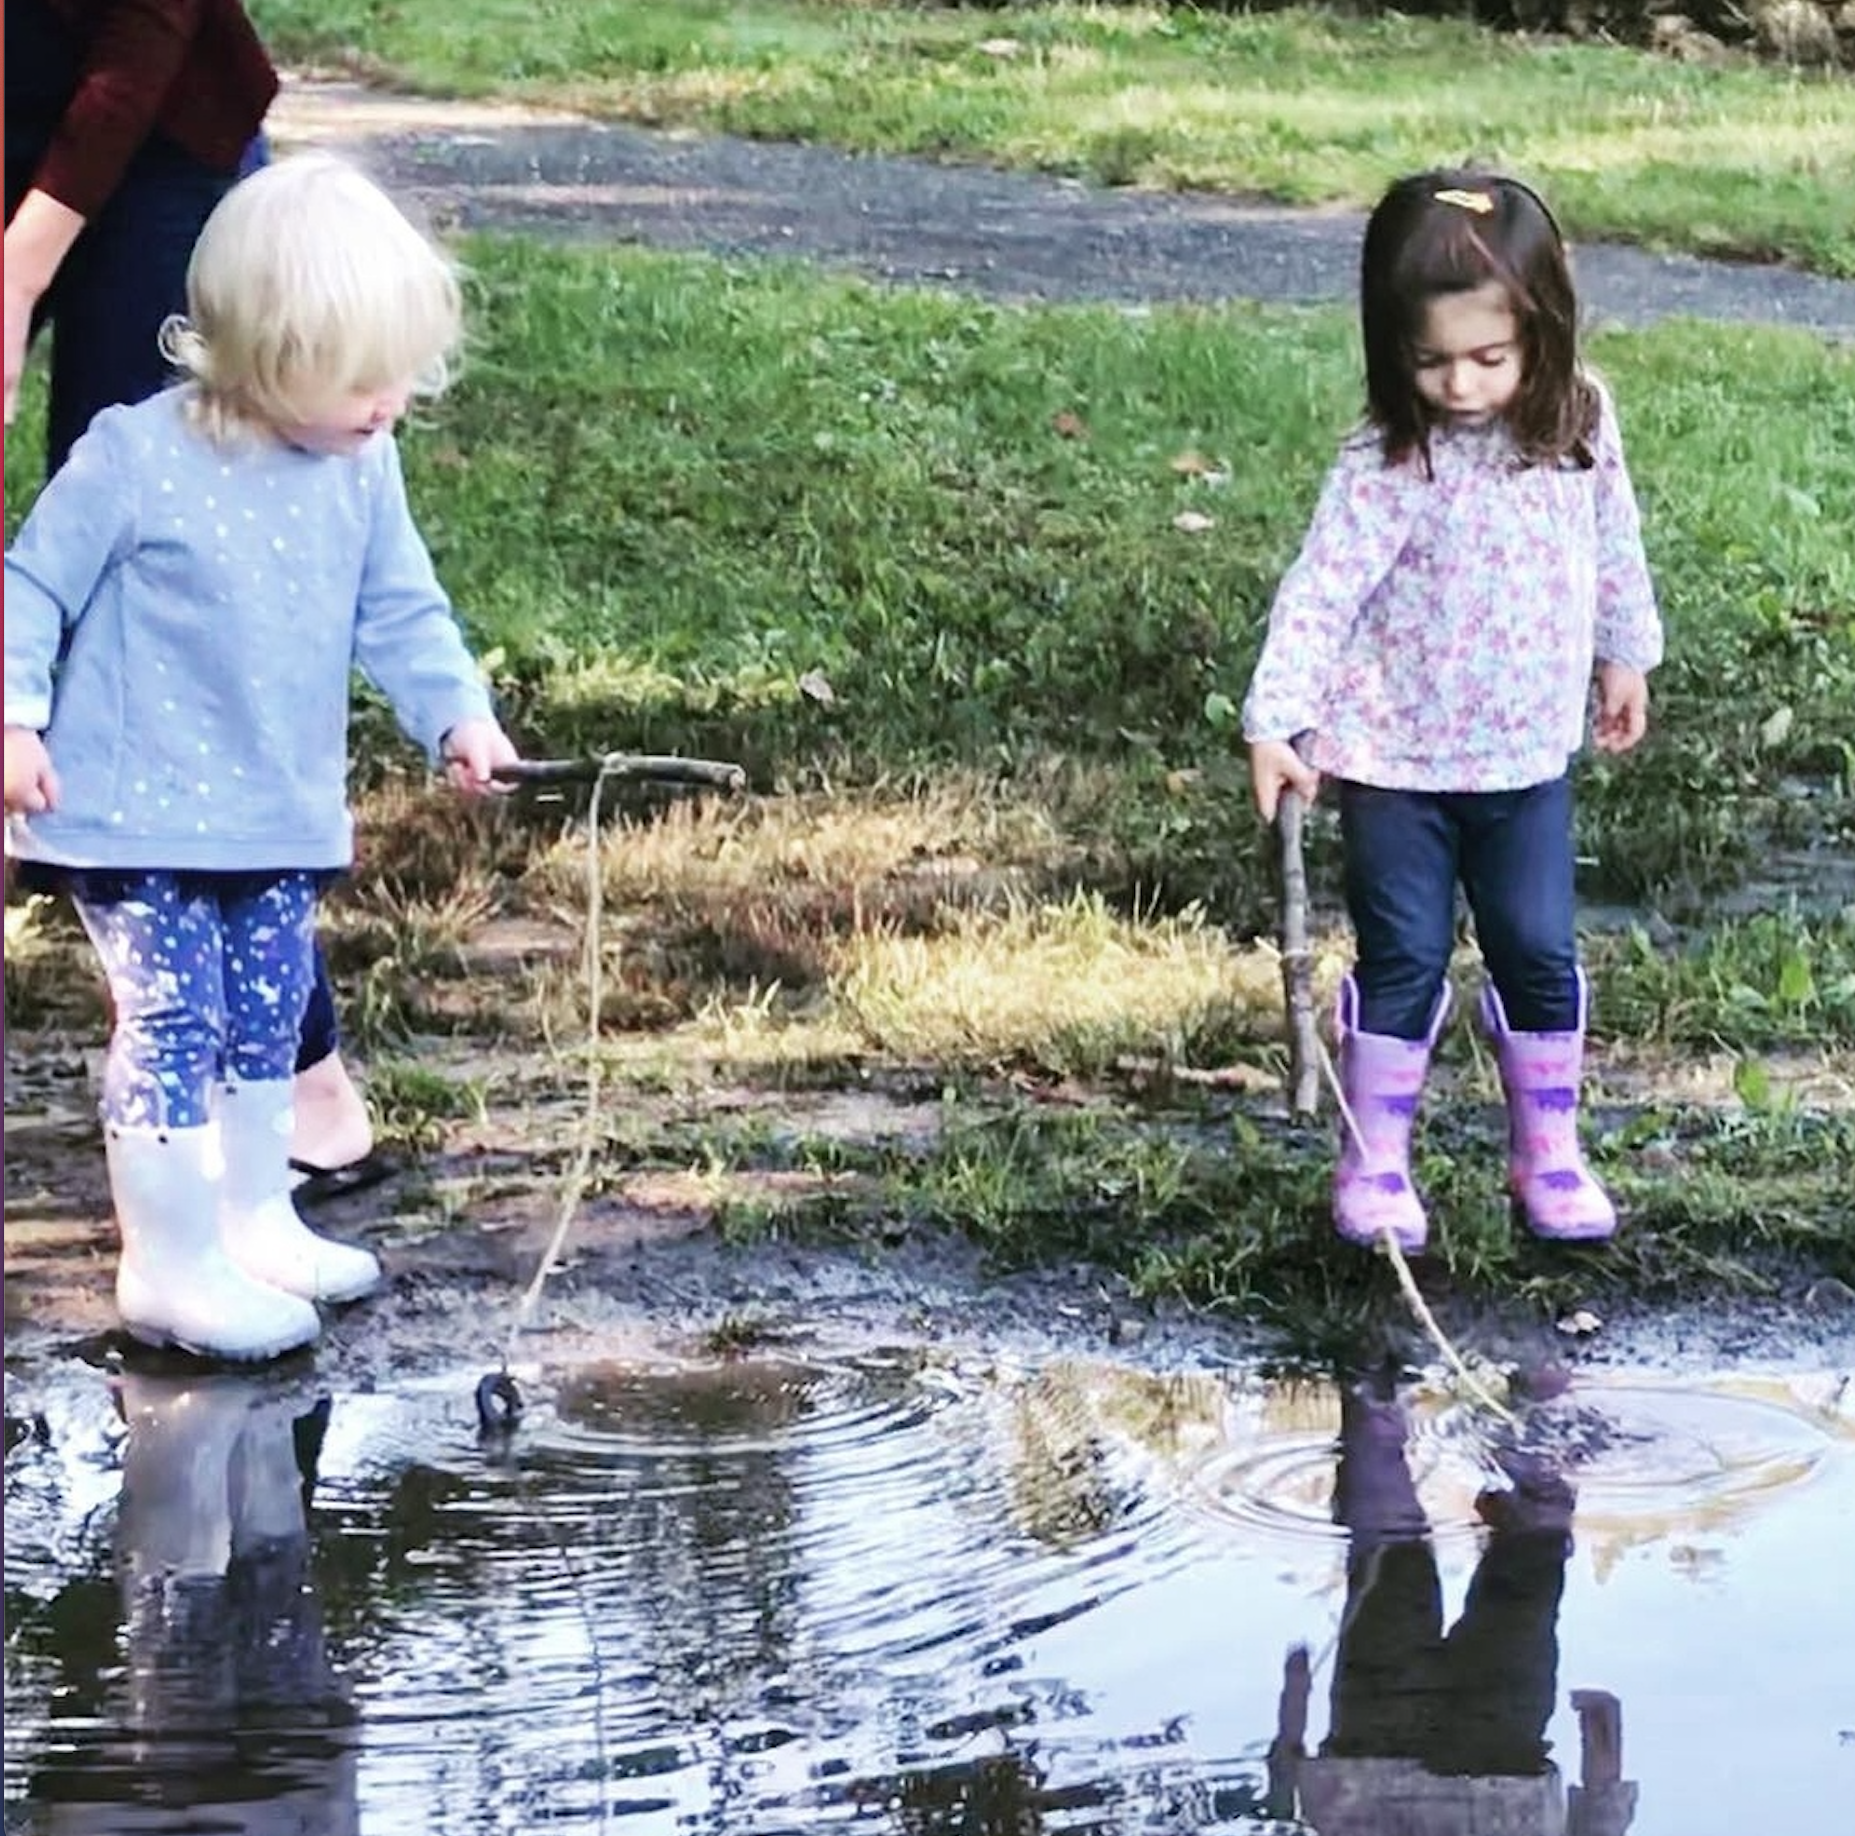 Go Fish! - Tinkergarten outdoor activities where kids learn through play